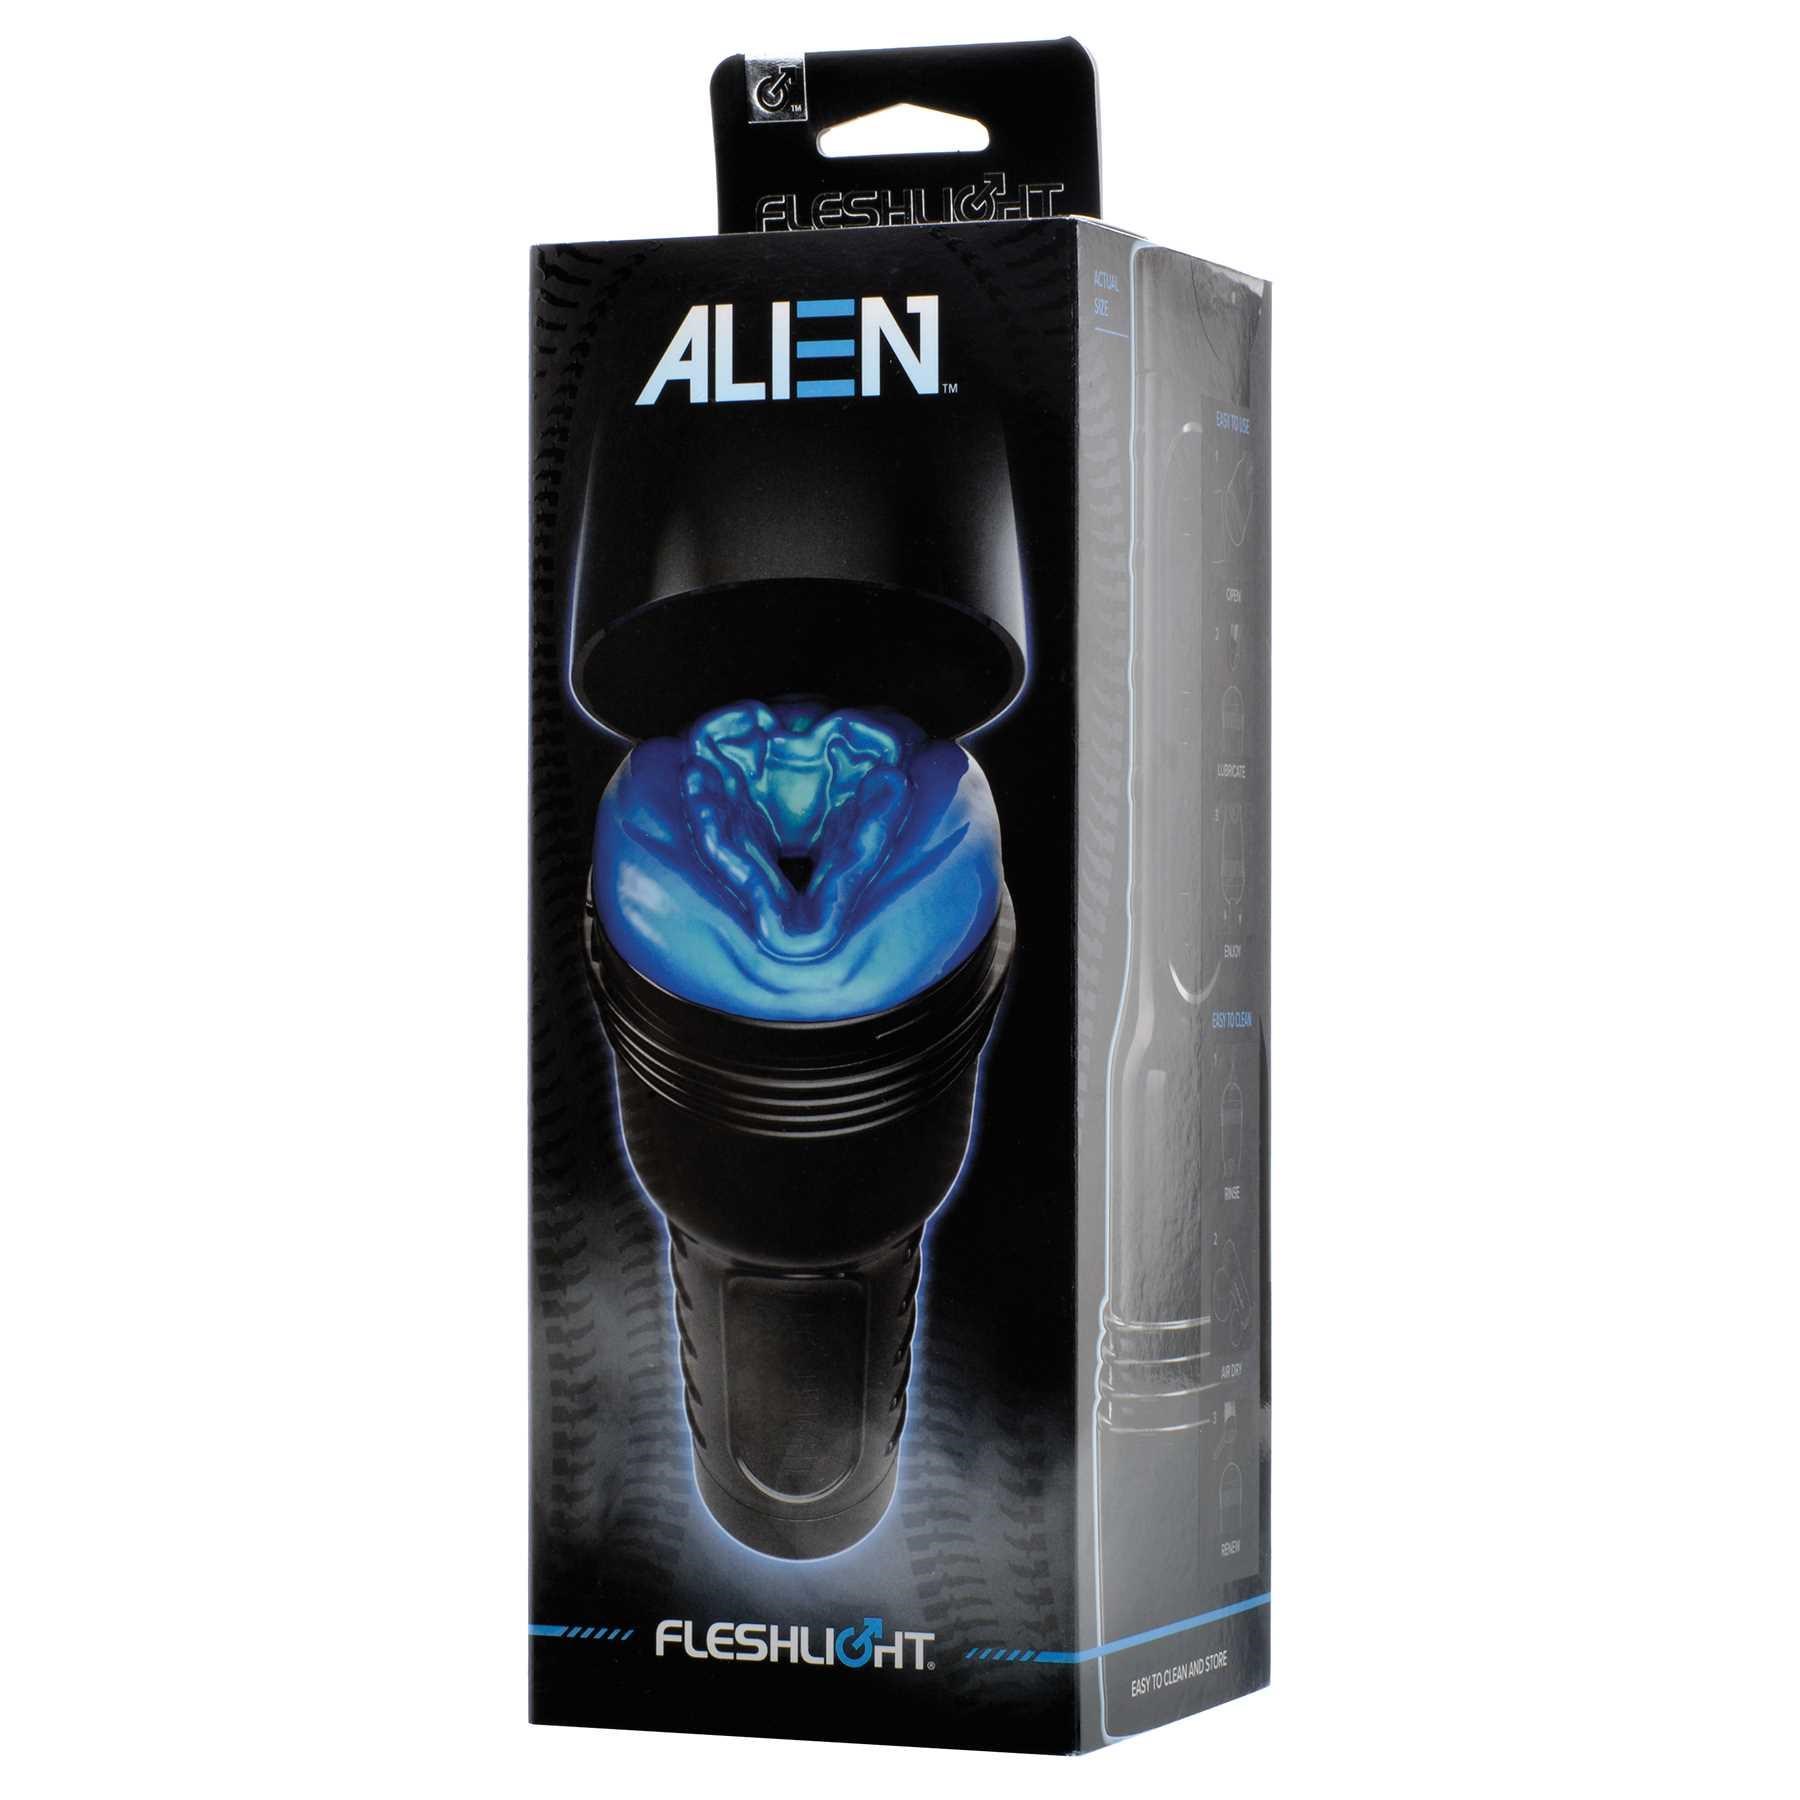 Fleshlight Alien product image box packaging